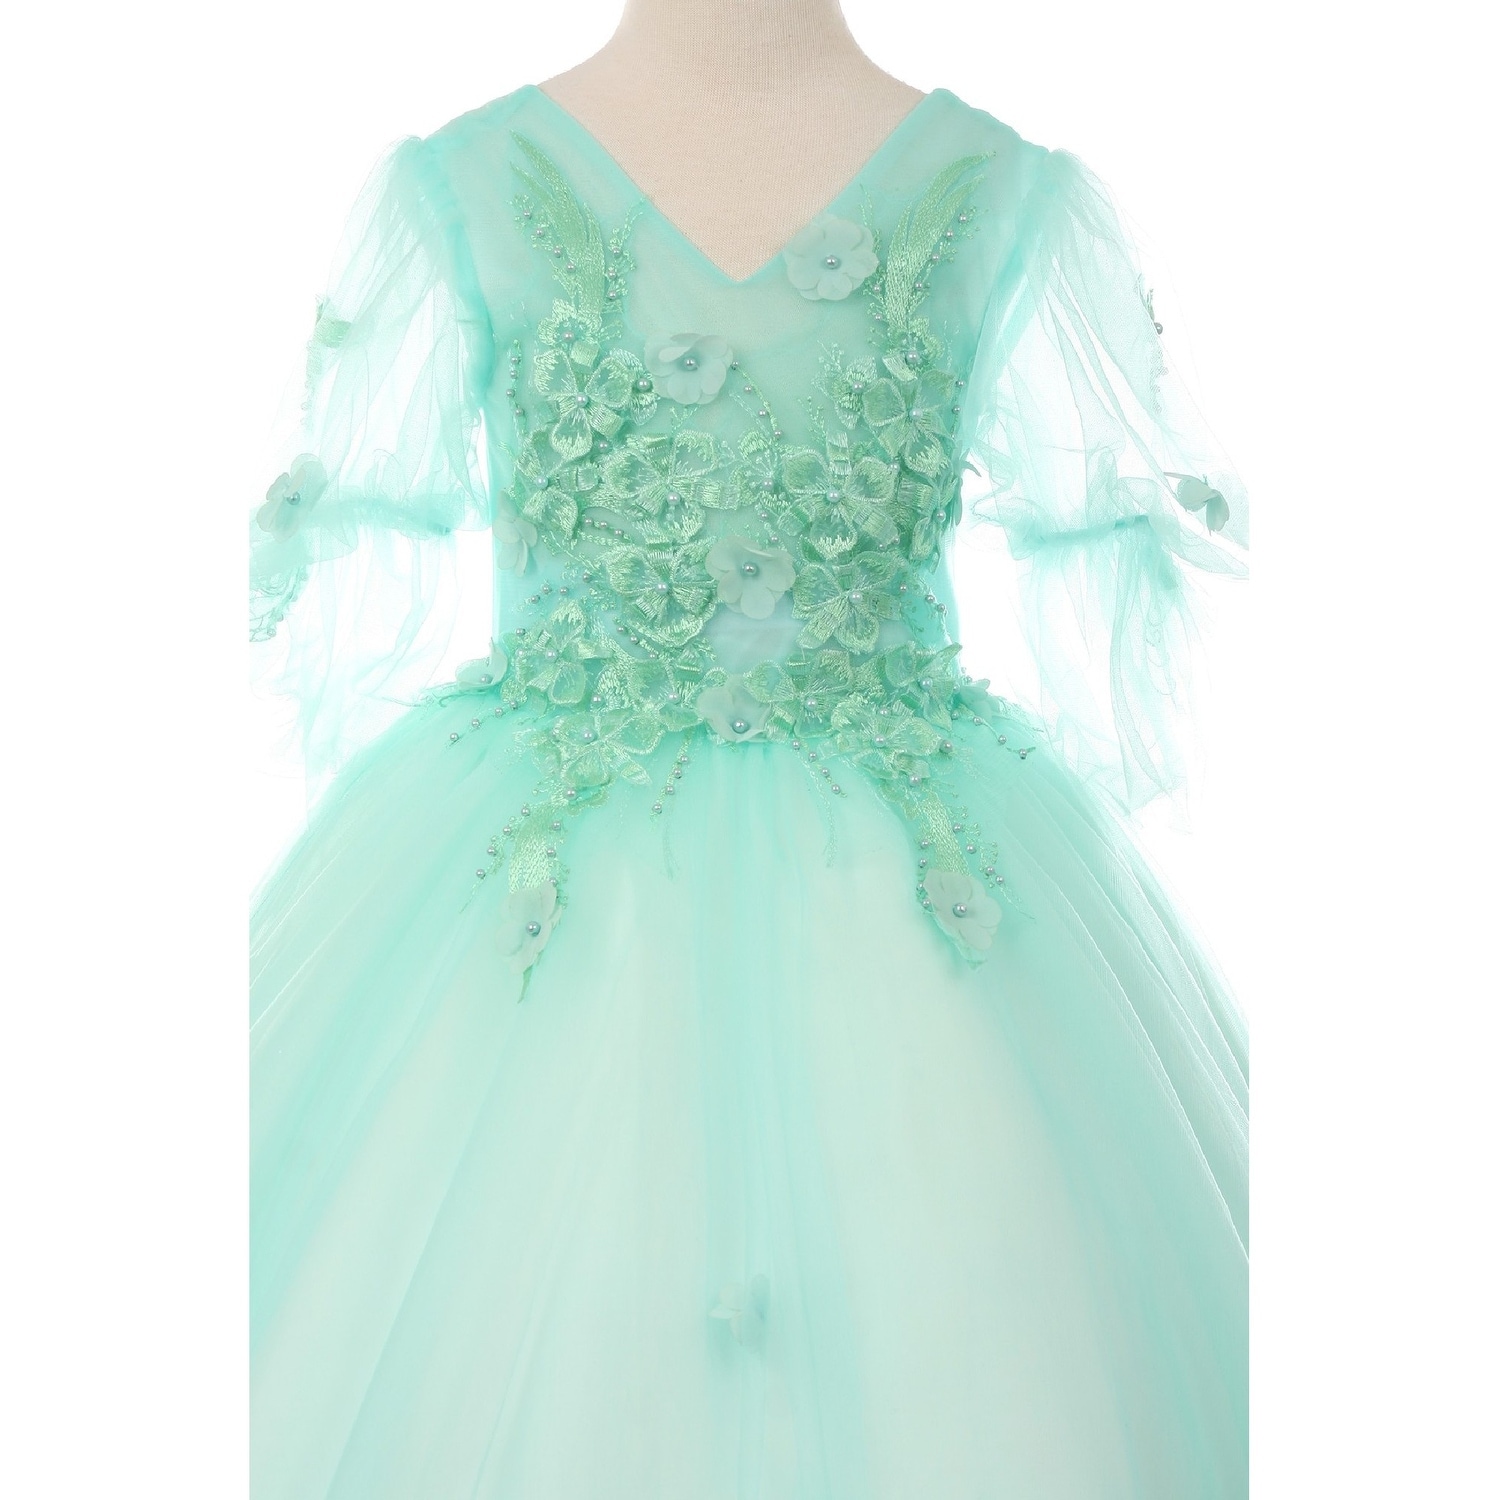 cinderella couture dress